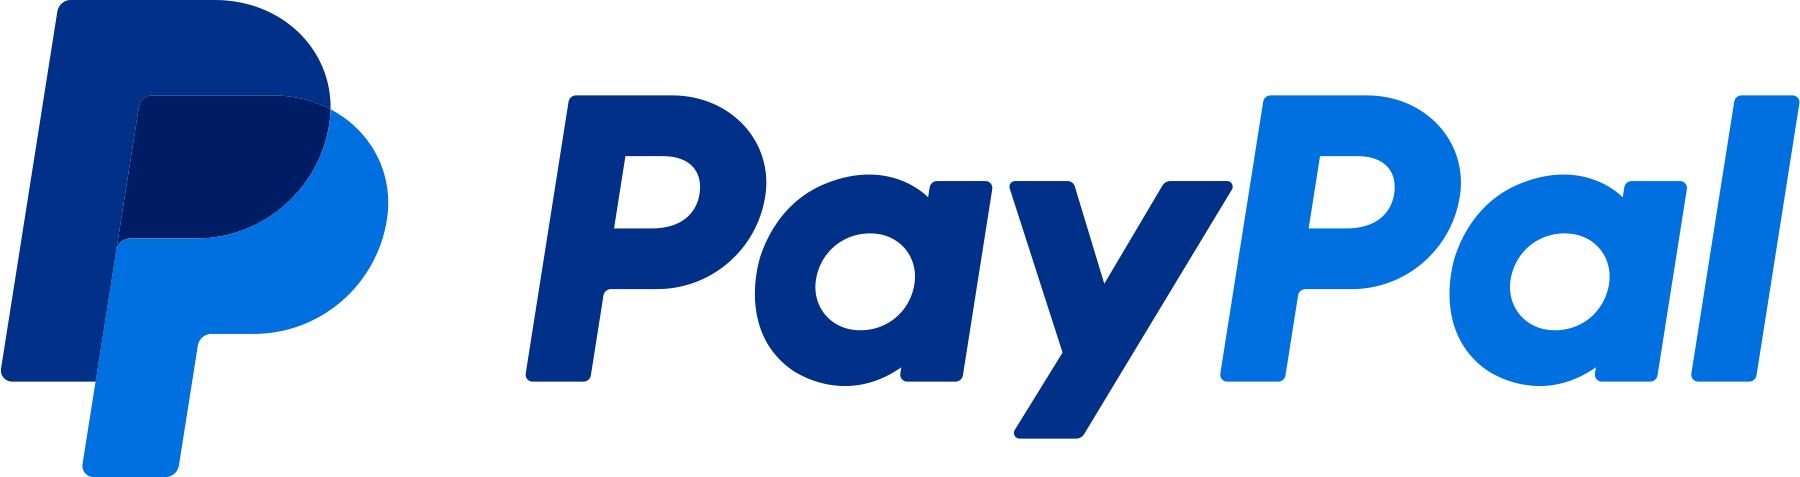 New PayPal Logo Horizontal Full Color Png 